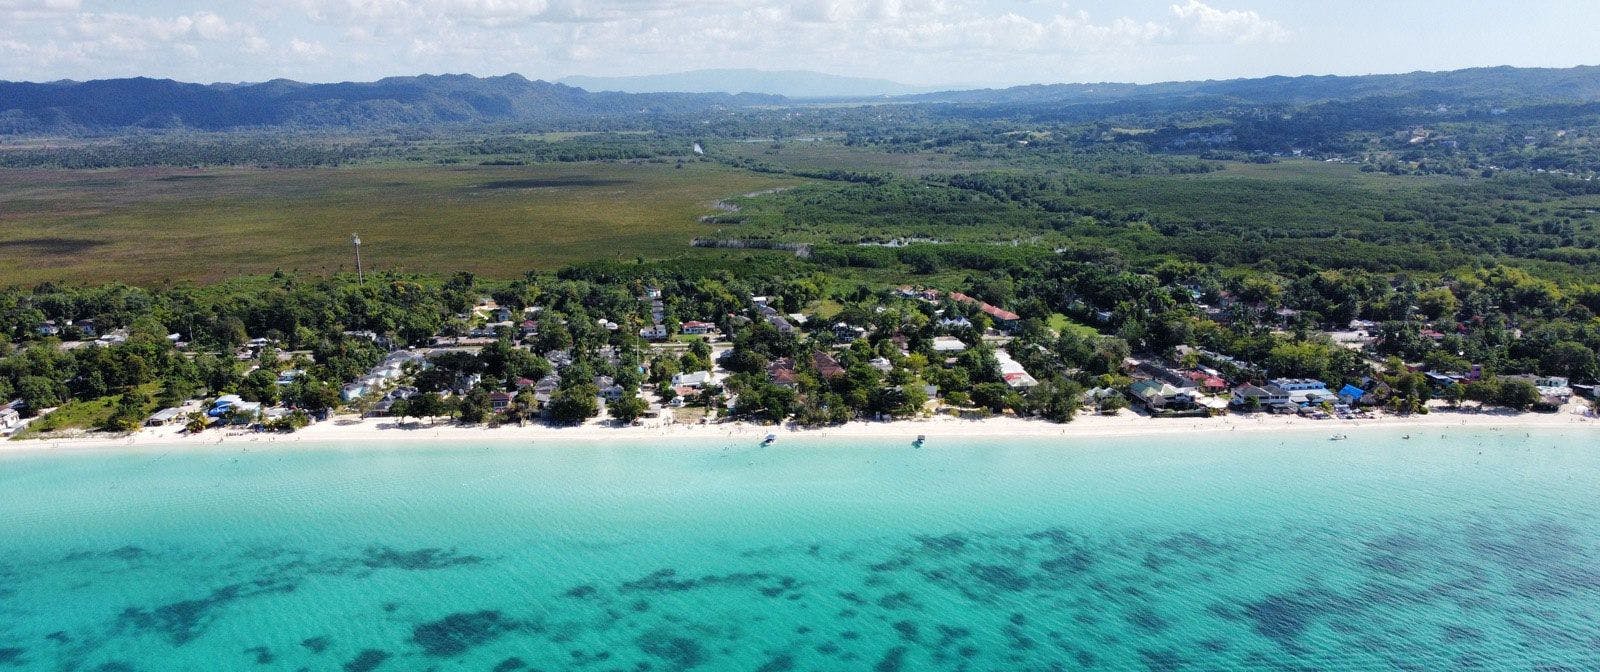 Westmoreland Barbados coastline with white sand beach